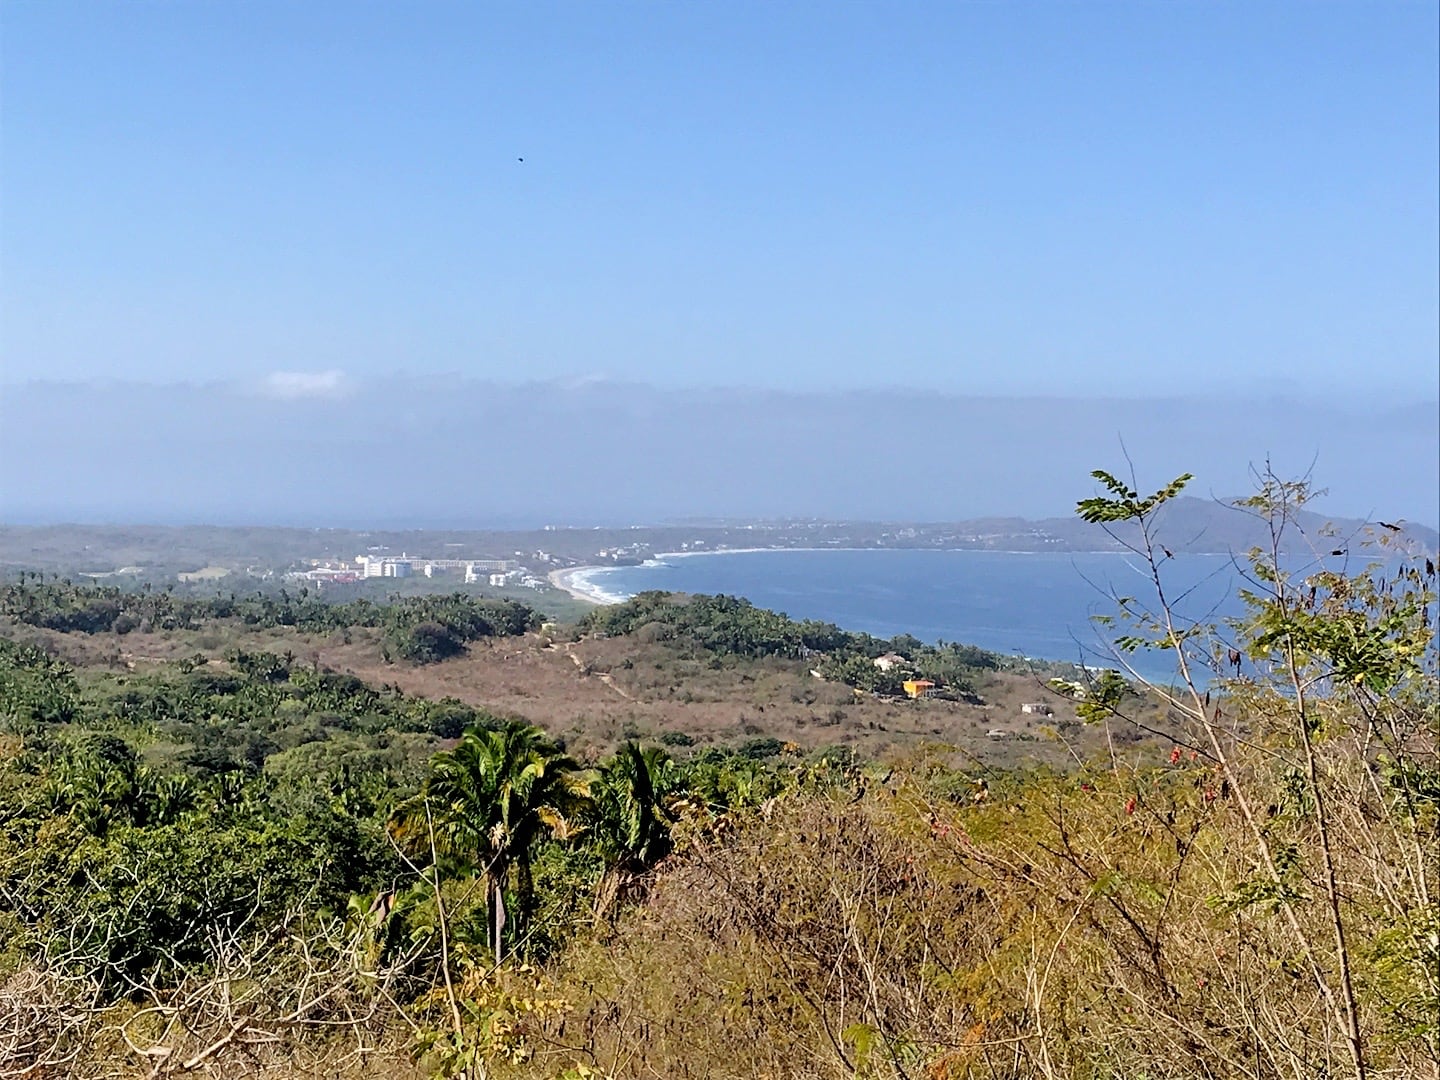 View of Punta Mita and bay from the top of Cerro del Mono, Nayarit